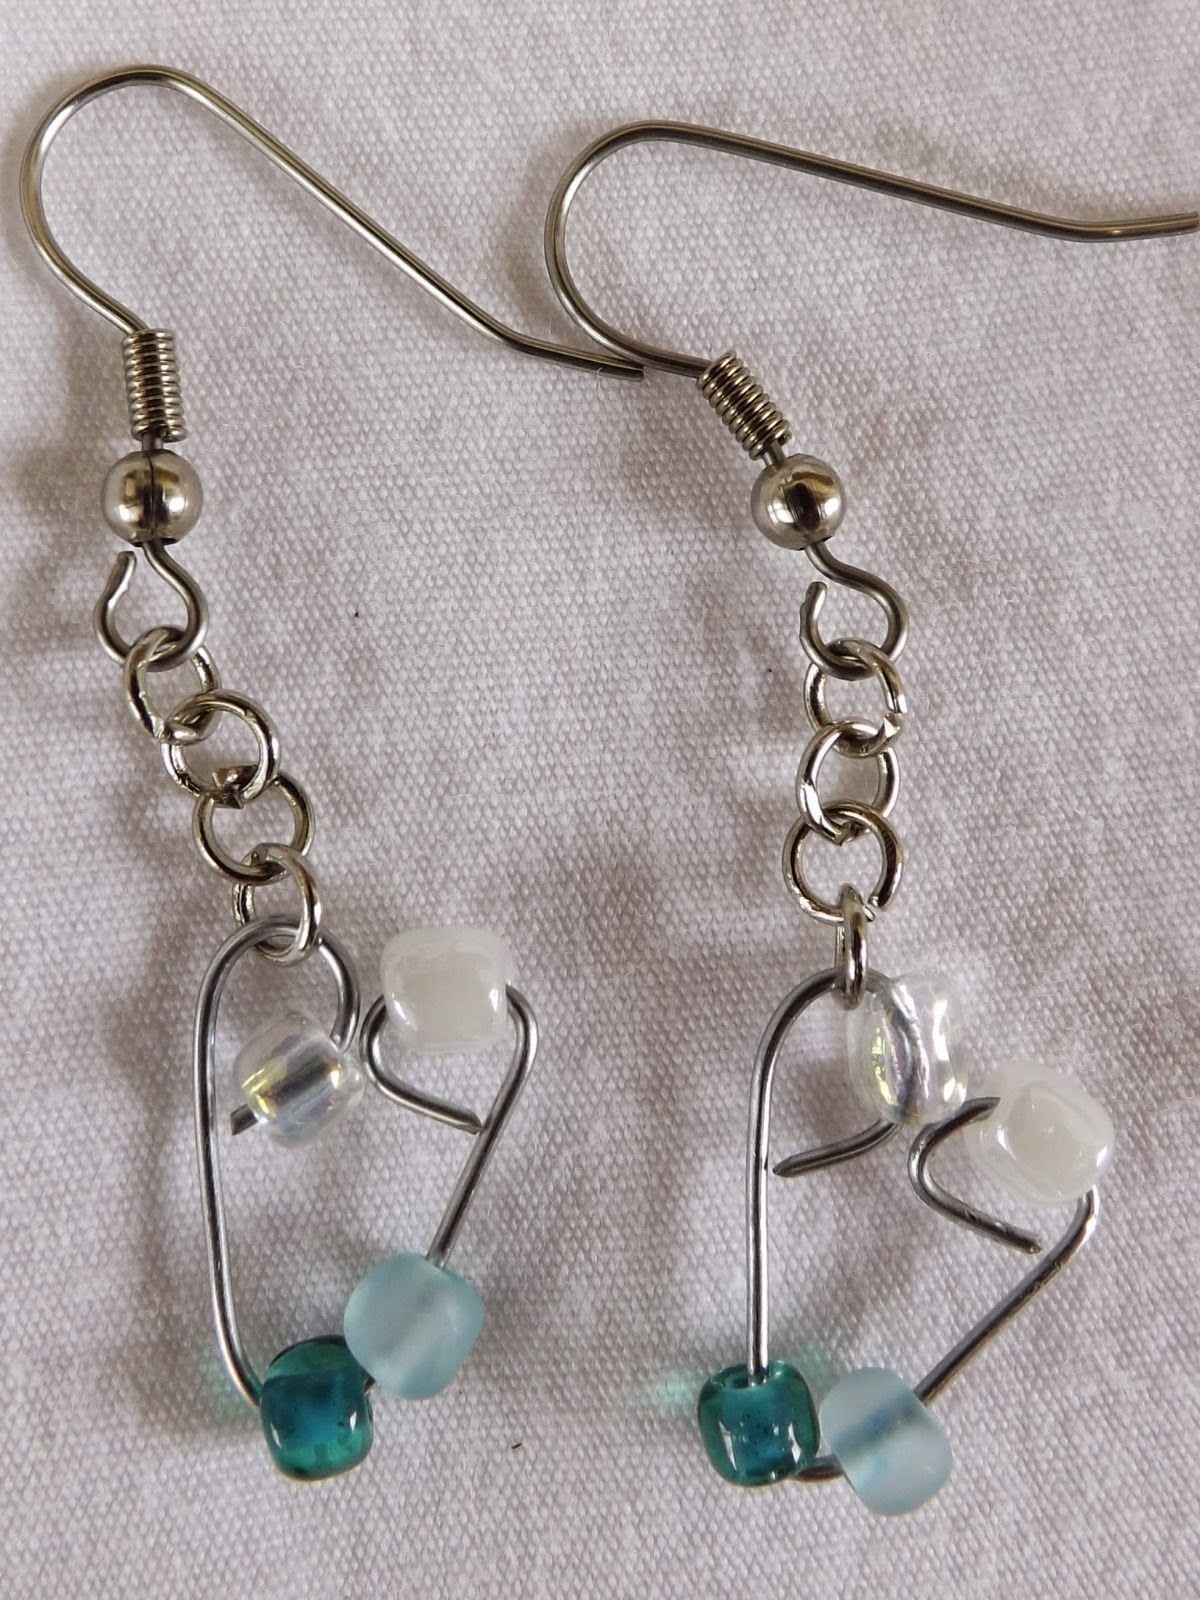 http://www.ebay.com/itm/Single-Heart-Earrings-Handmade-glass-dangle-with-stainless-steel-hook-/261770359867?fb_action_ids=318221801699656&fb_action_types=og.shares